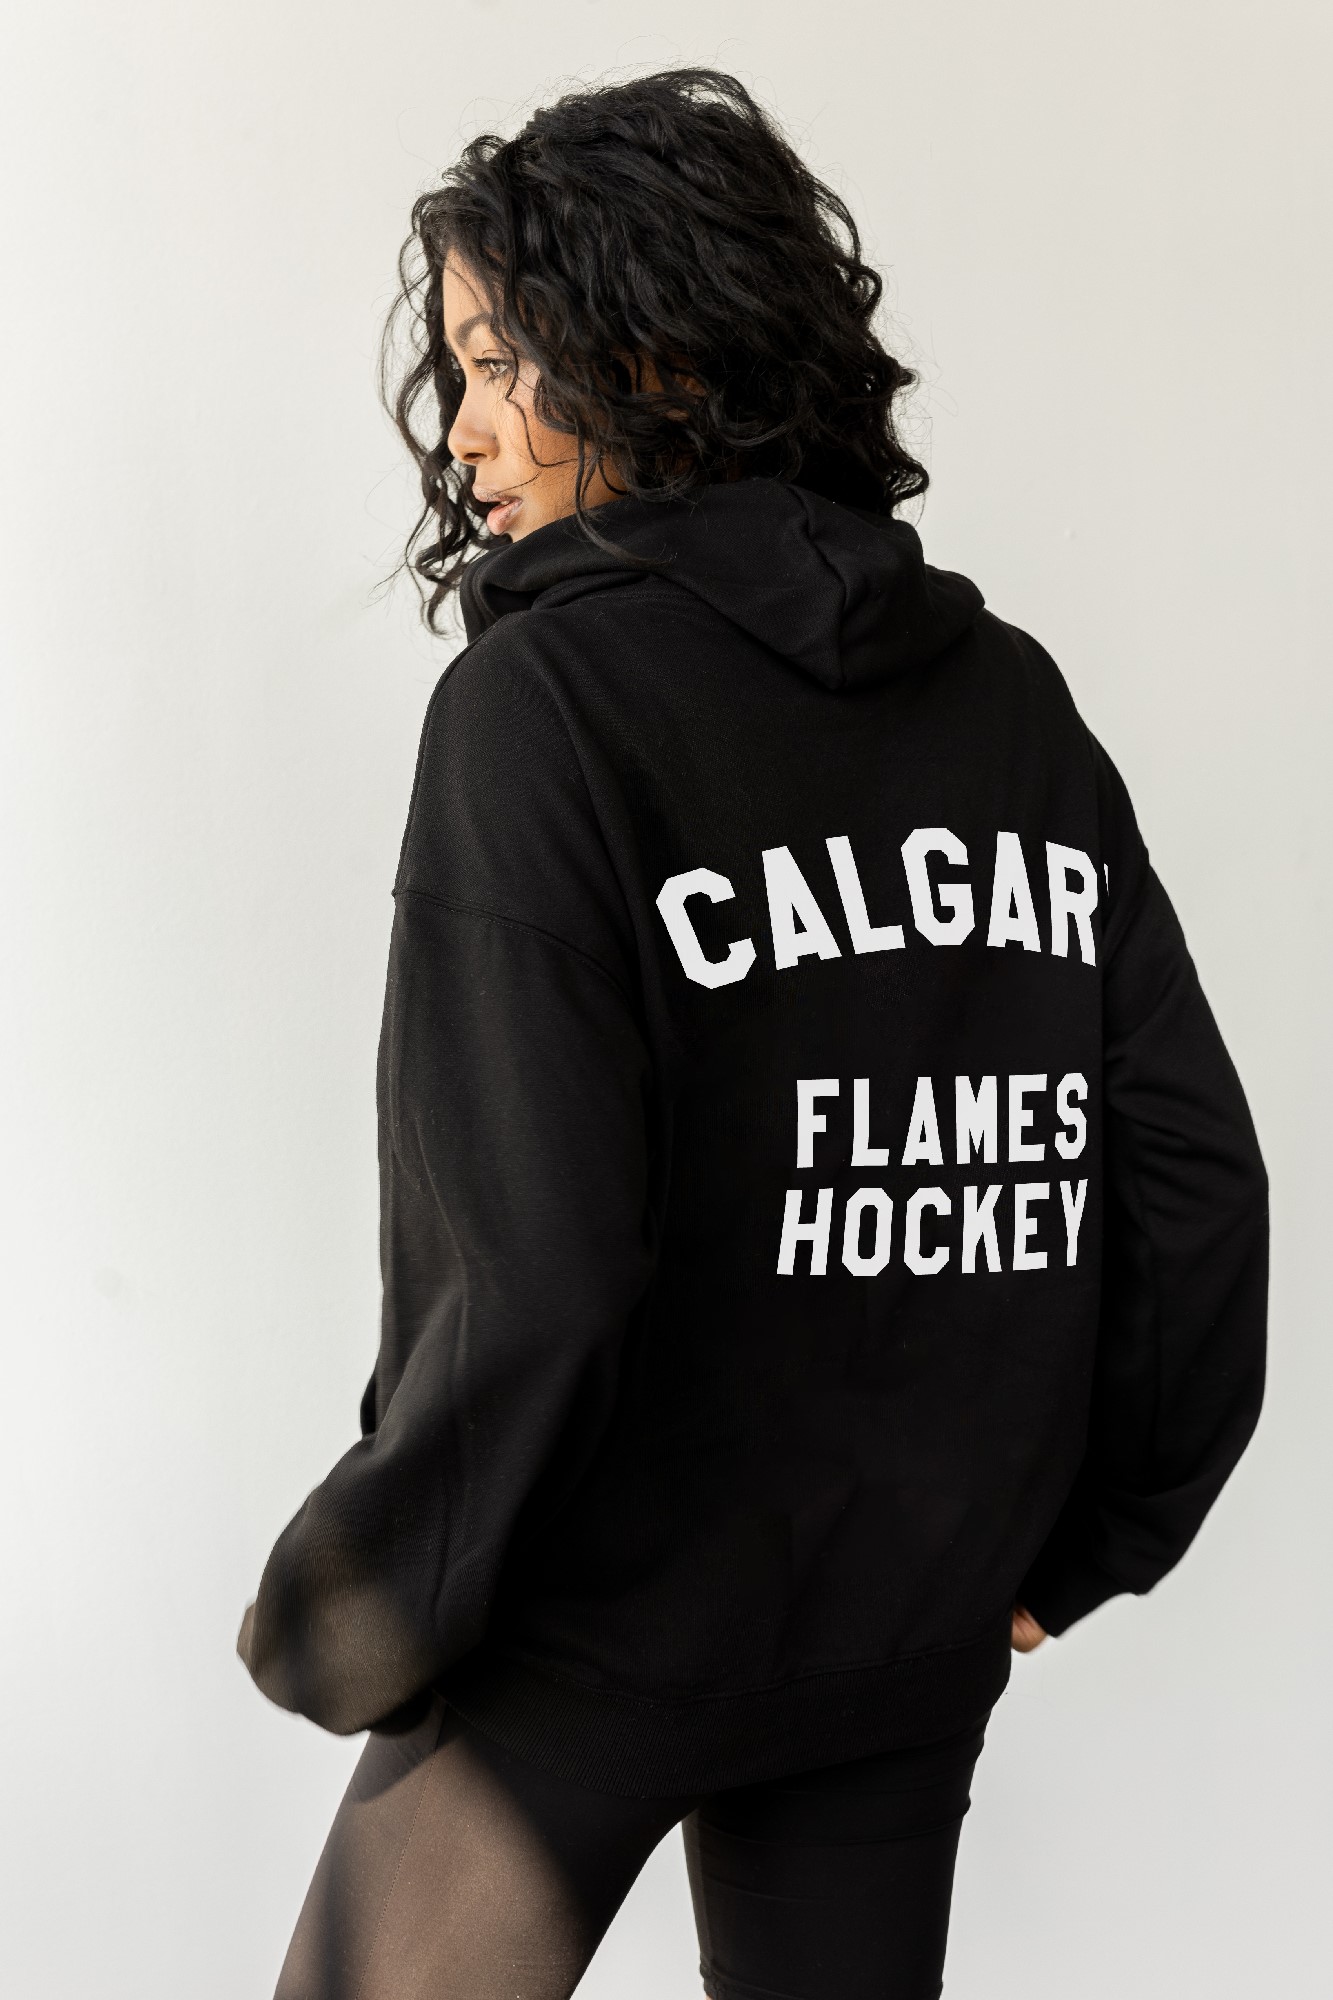 Calgary Flames - Flames fans – head to FanAttic at North Hill